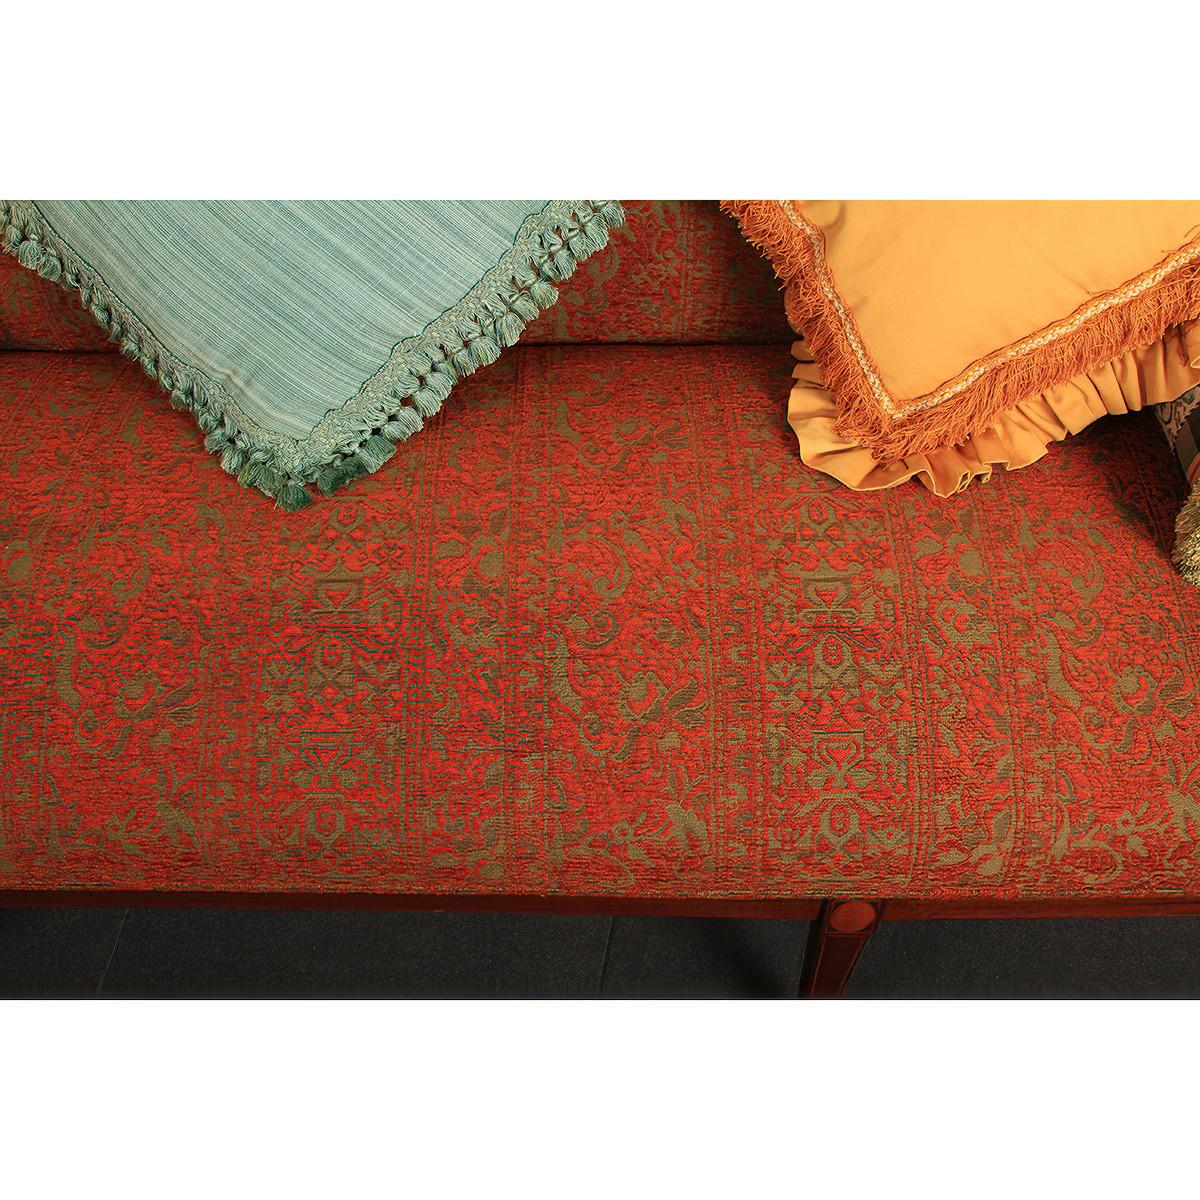 Late 18th Century Federal Mahogany Inlaid Sofa